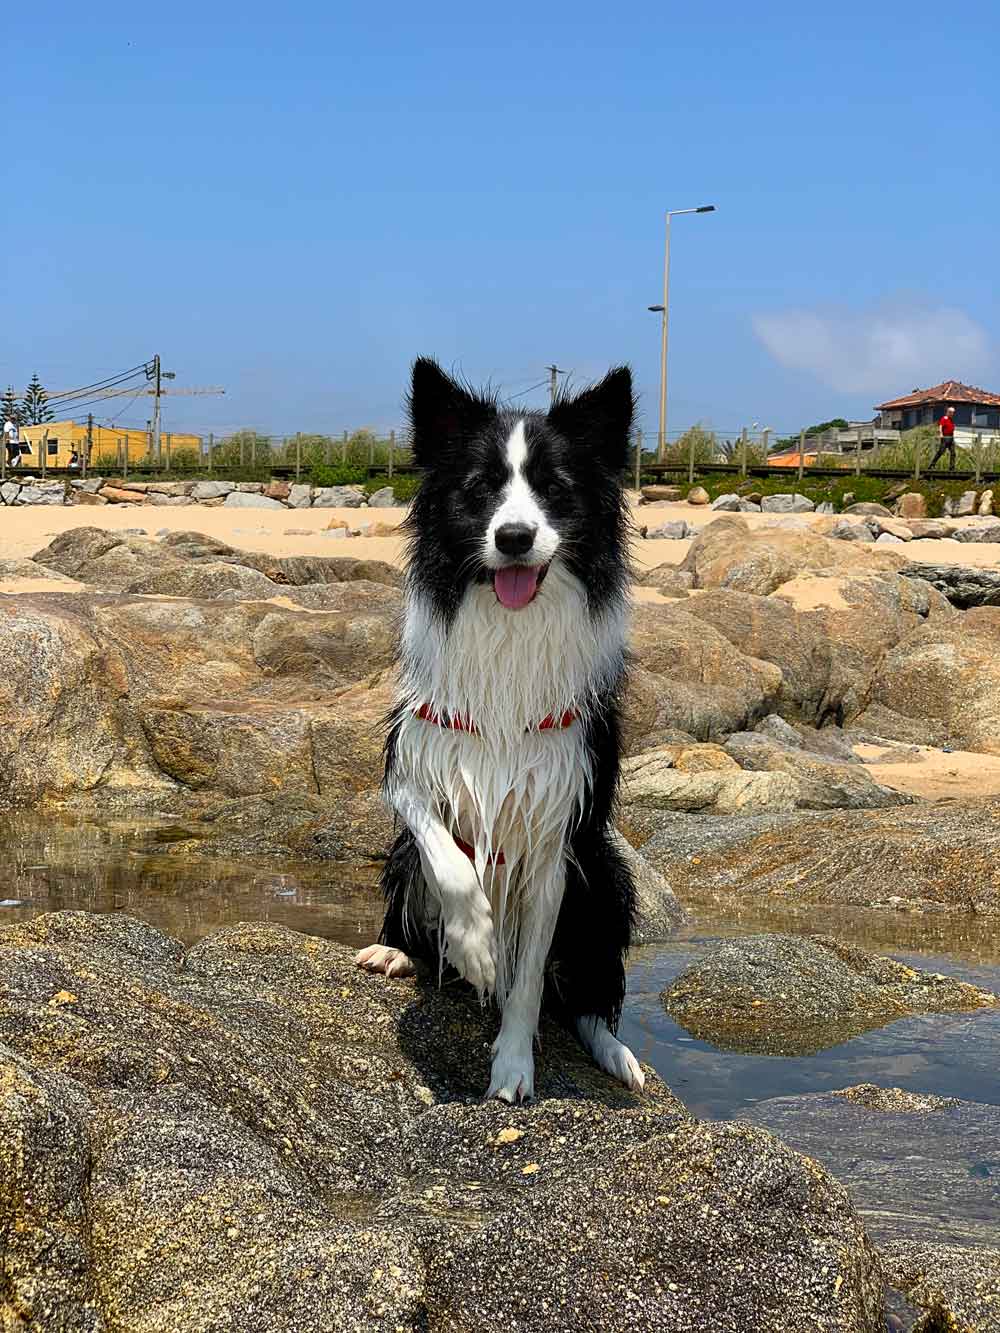 Rafa sitting on the rocks, on a pet-friendly beach.